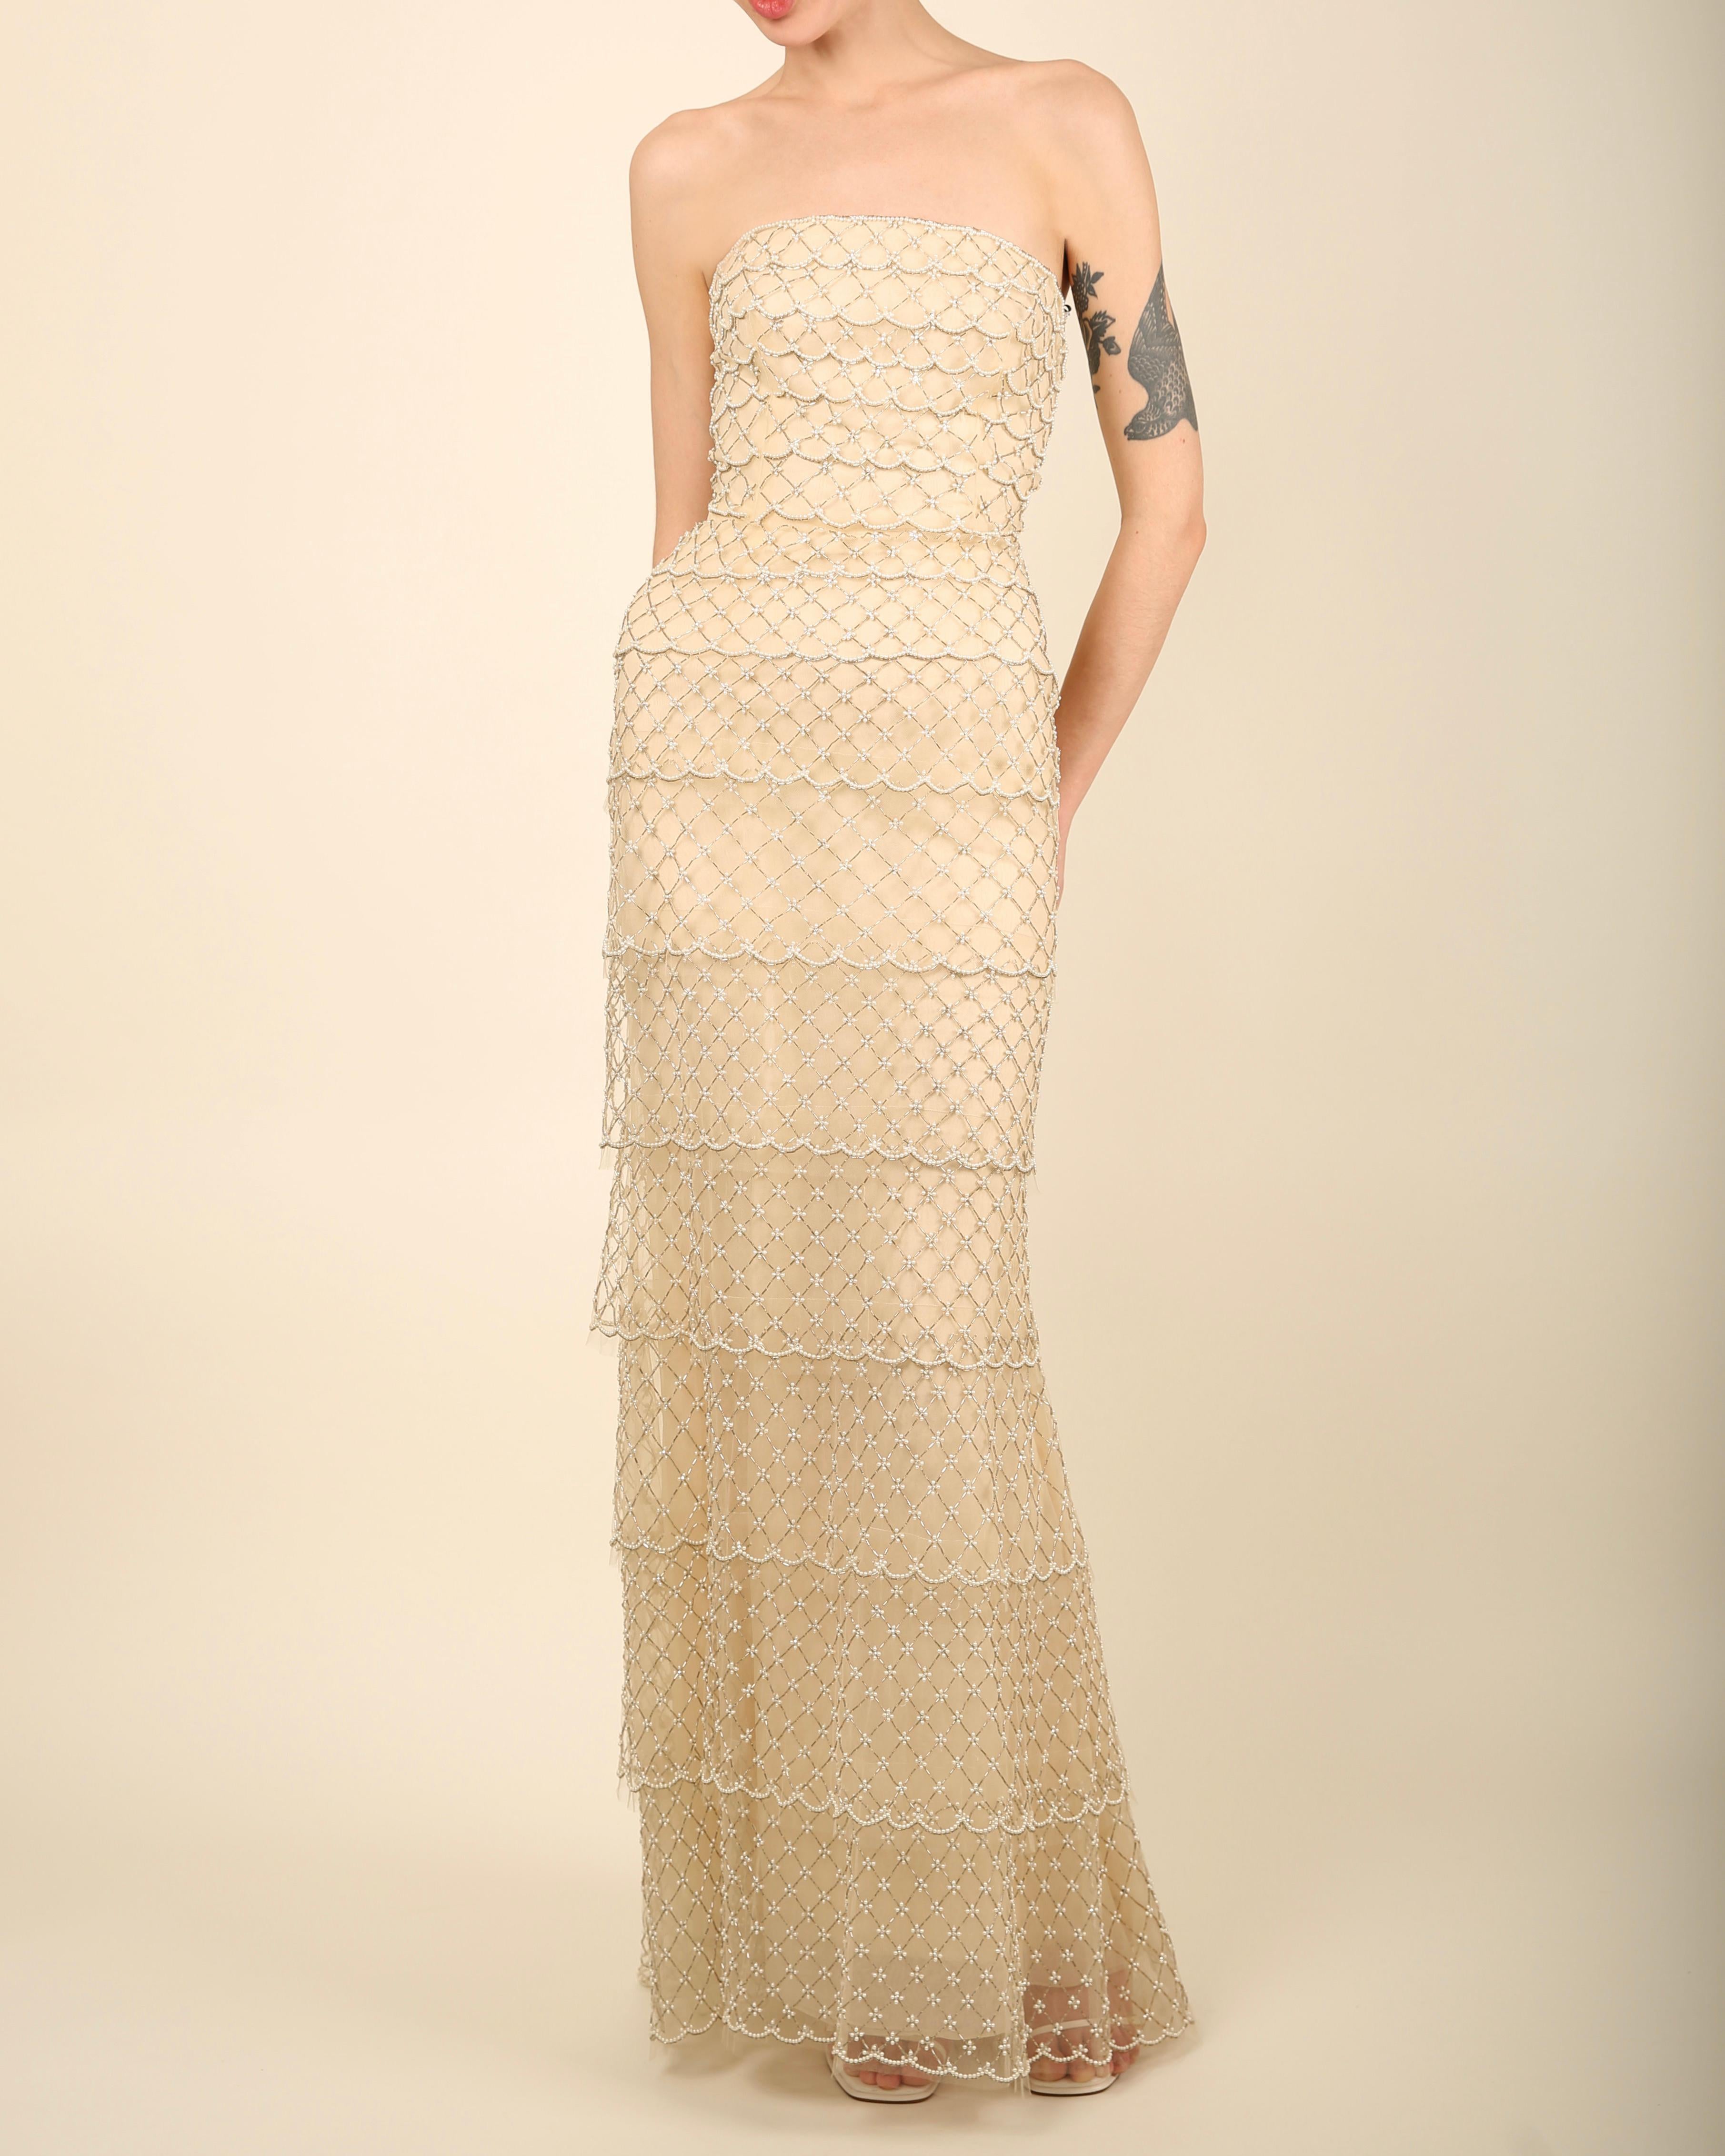 Oscar de la Renta S/S 2014 strapless tiered sheer mesh pearl wedding dress gown For Sale 3